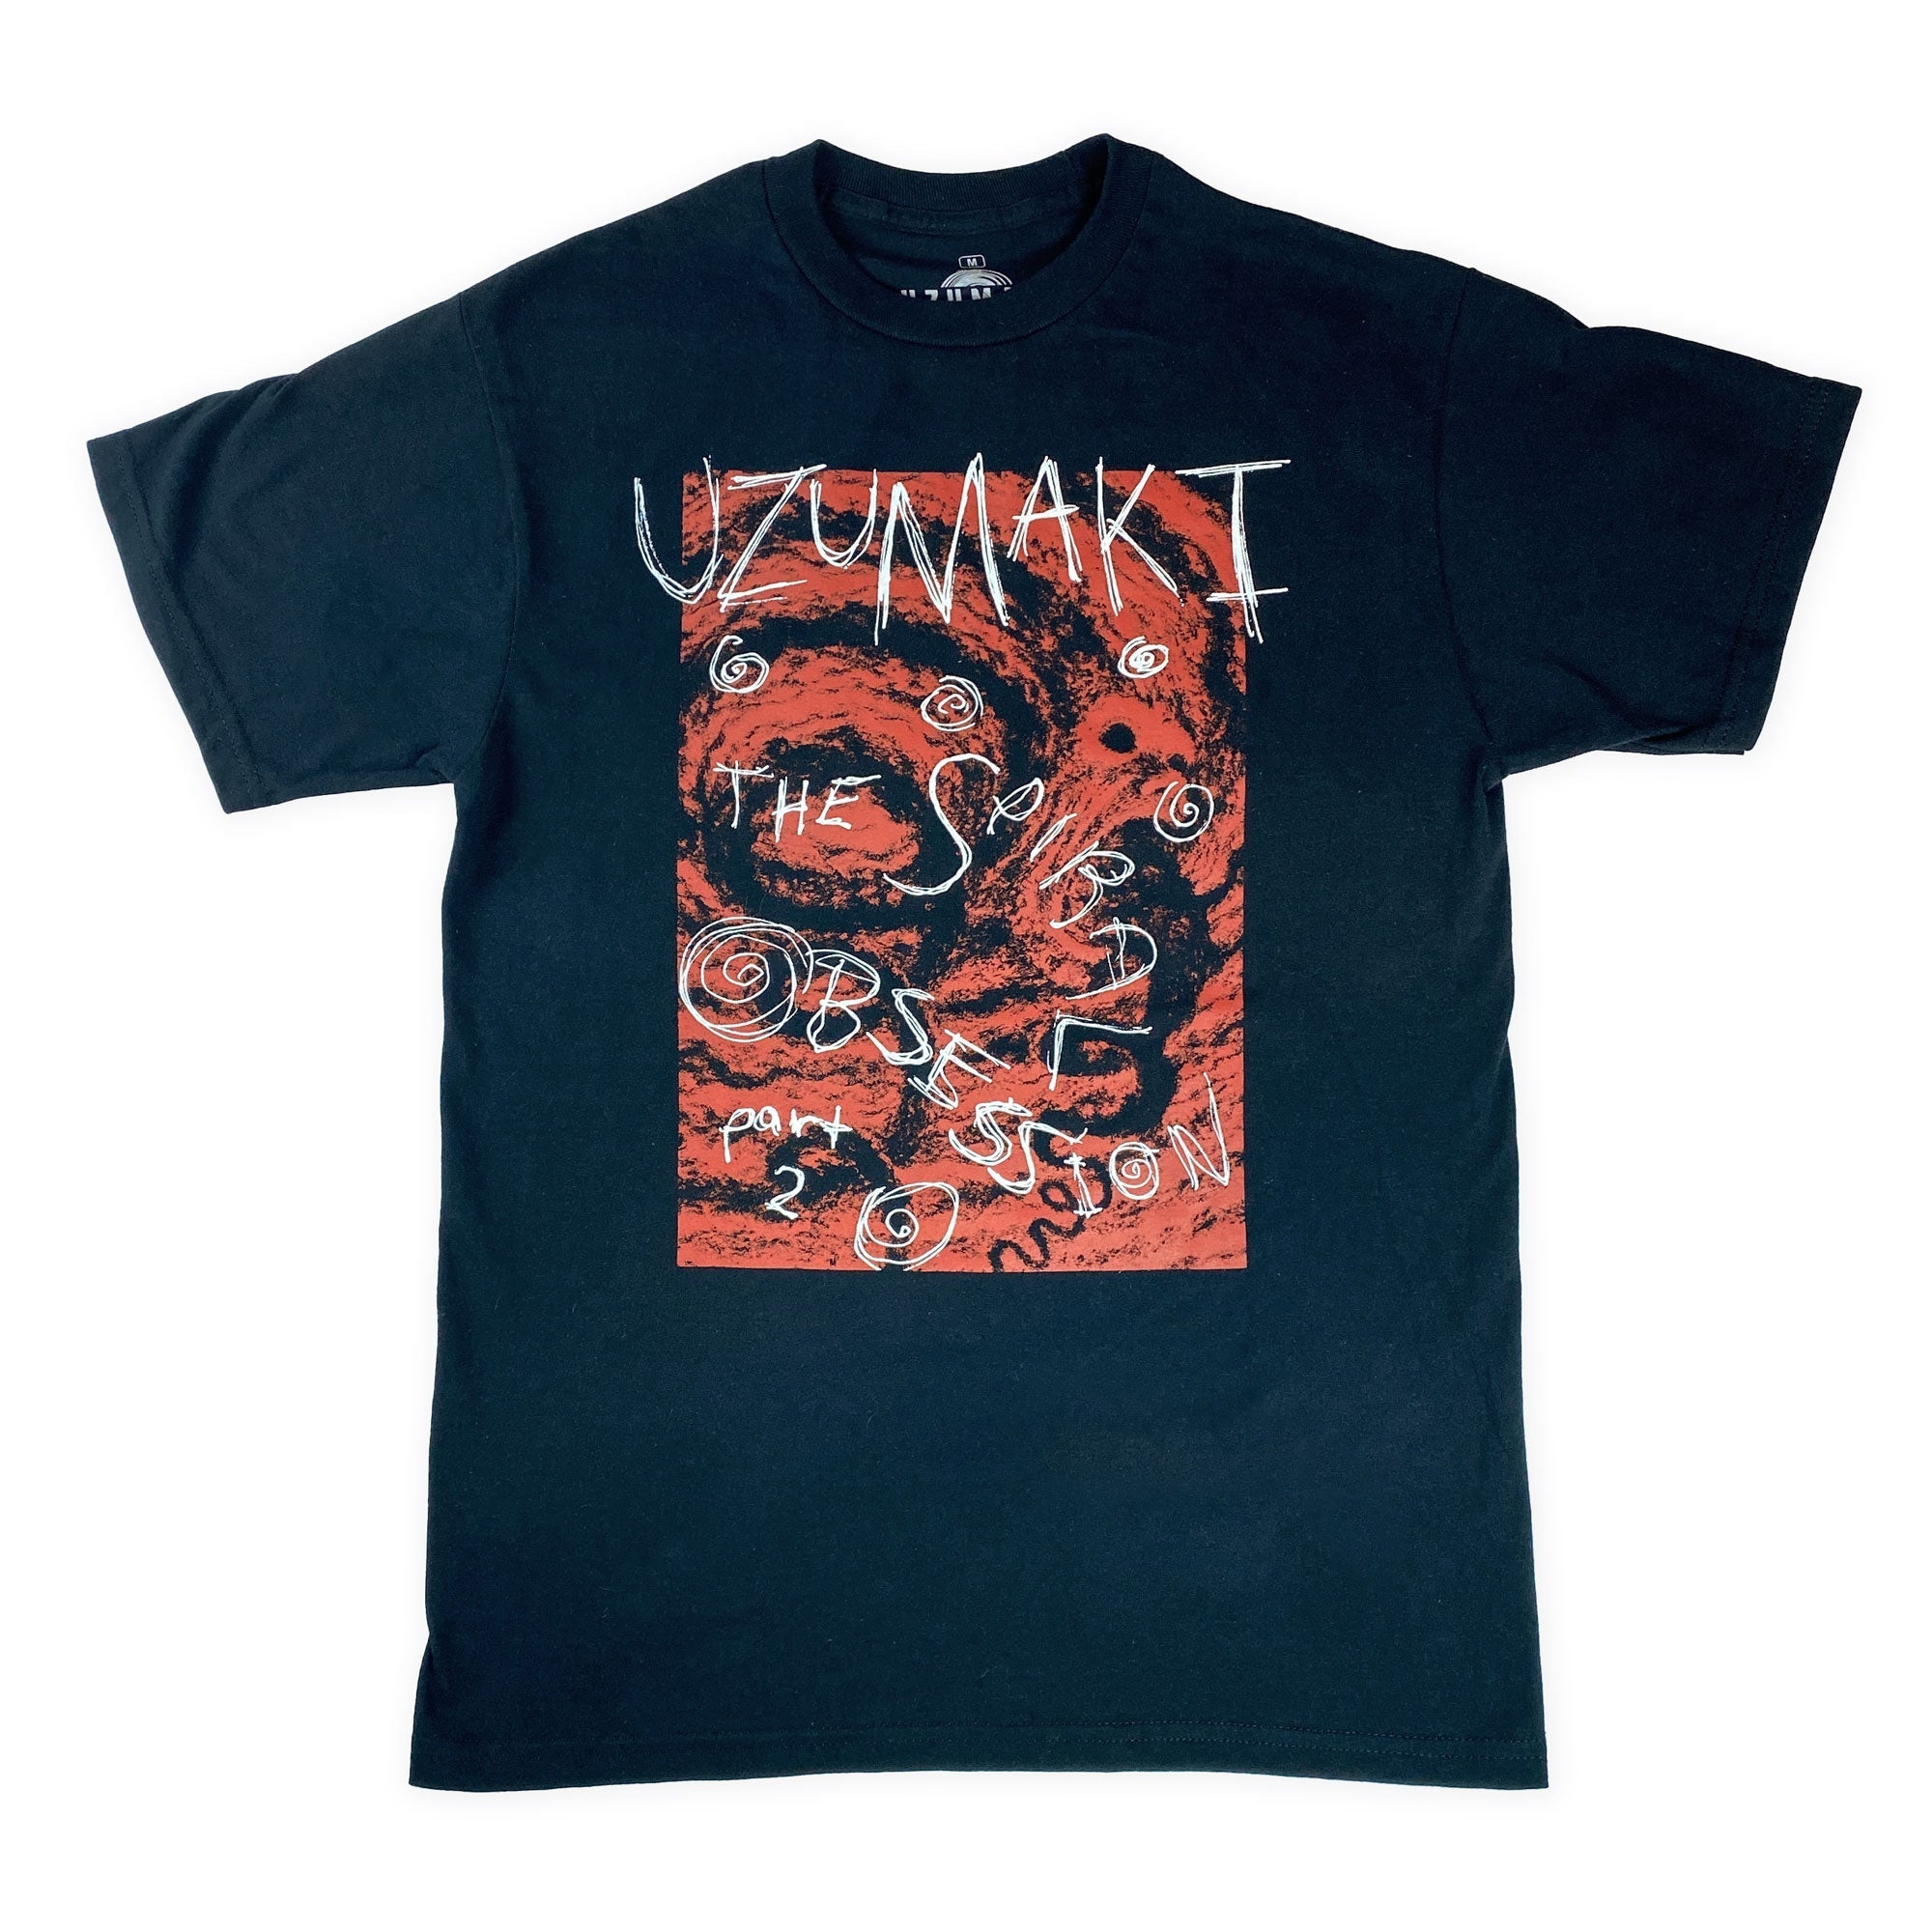 Junji Ito - Uzumaki Spiral Obesession T-Shirt - Crunchyroll Exclusive ...